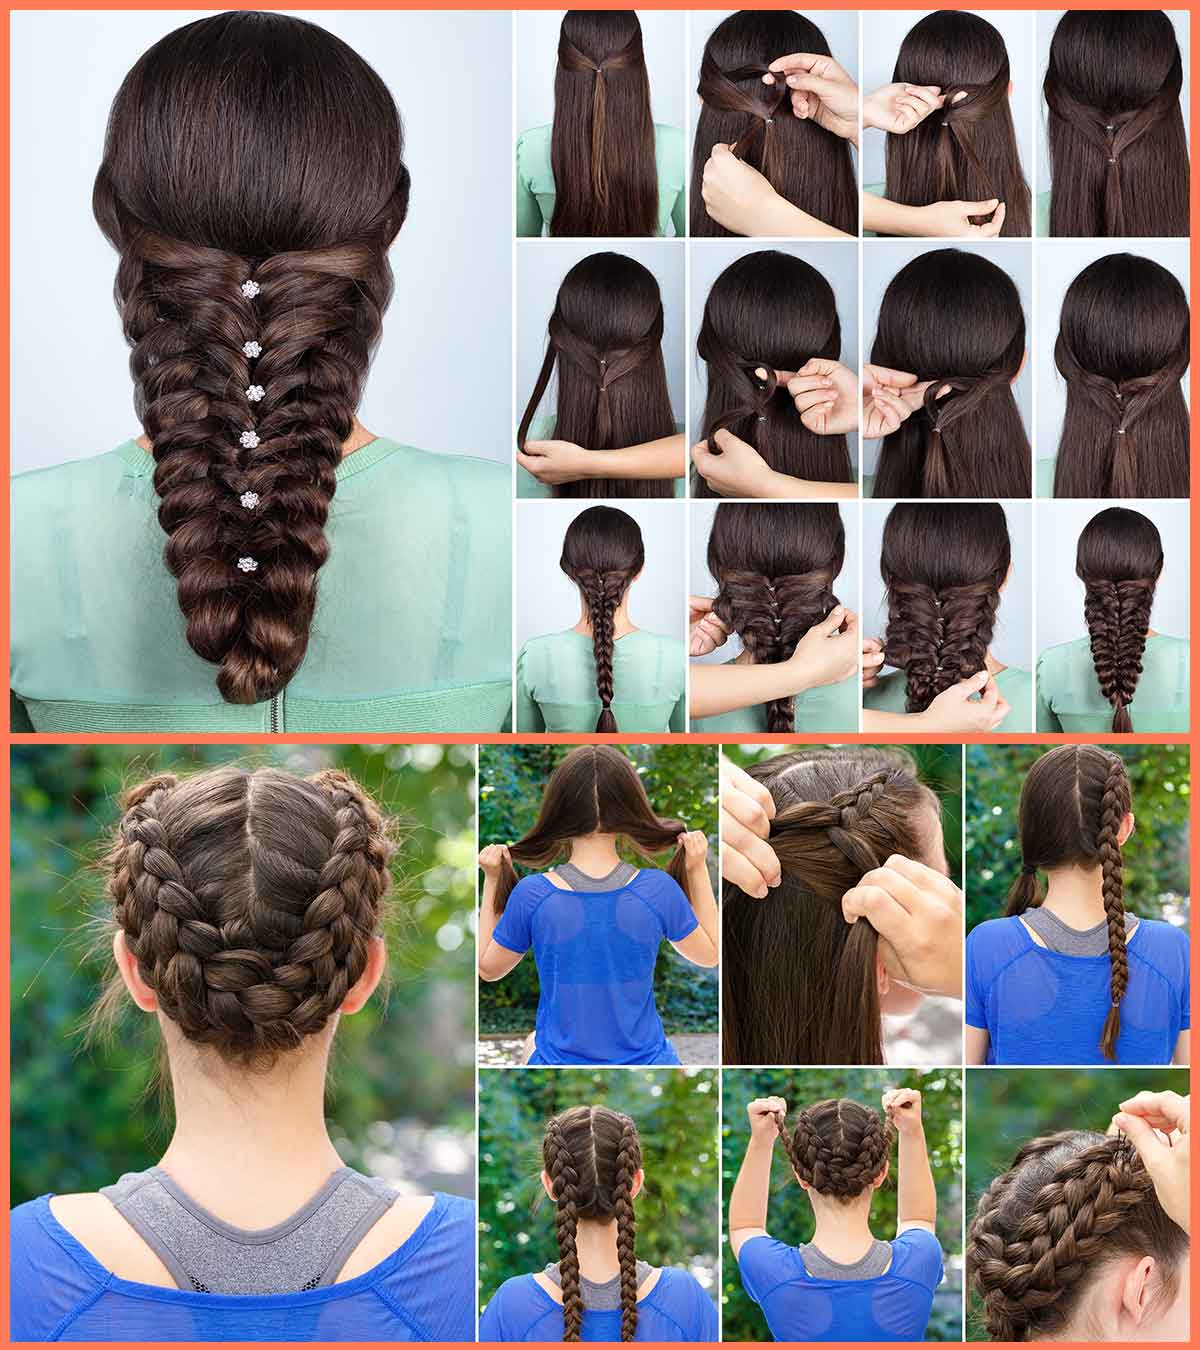 Woman Hairstyle Images  Free Download on Freepik